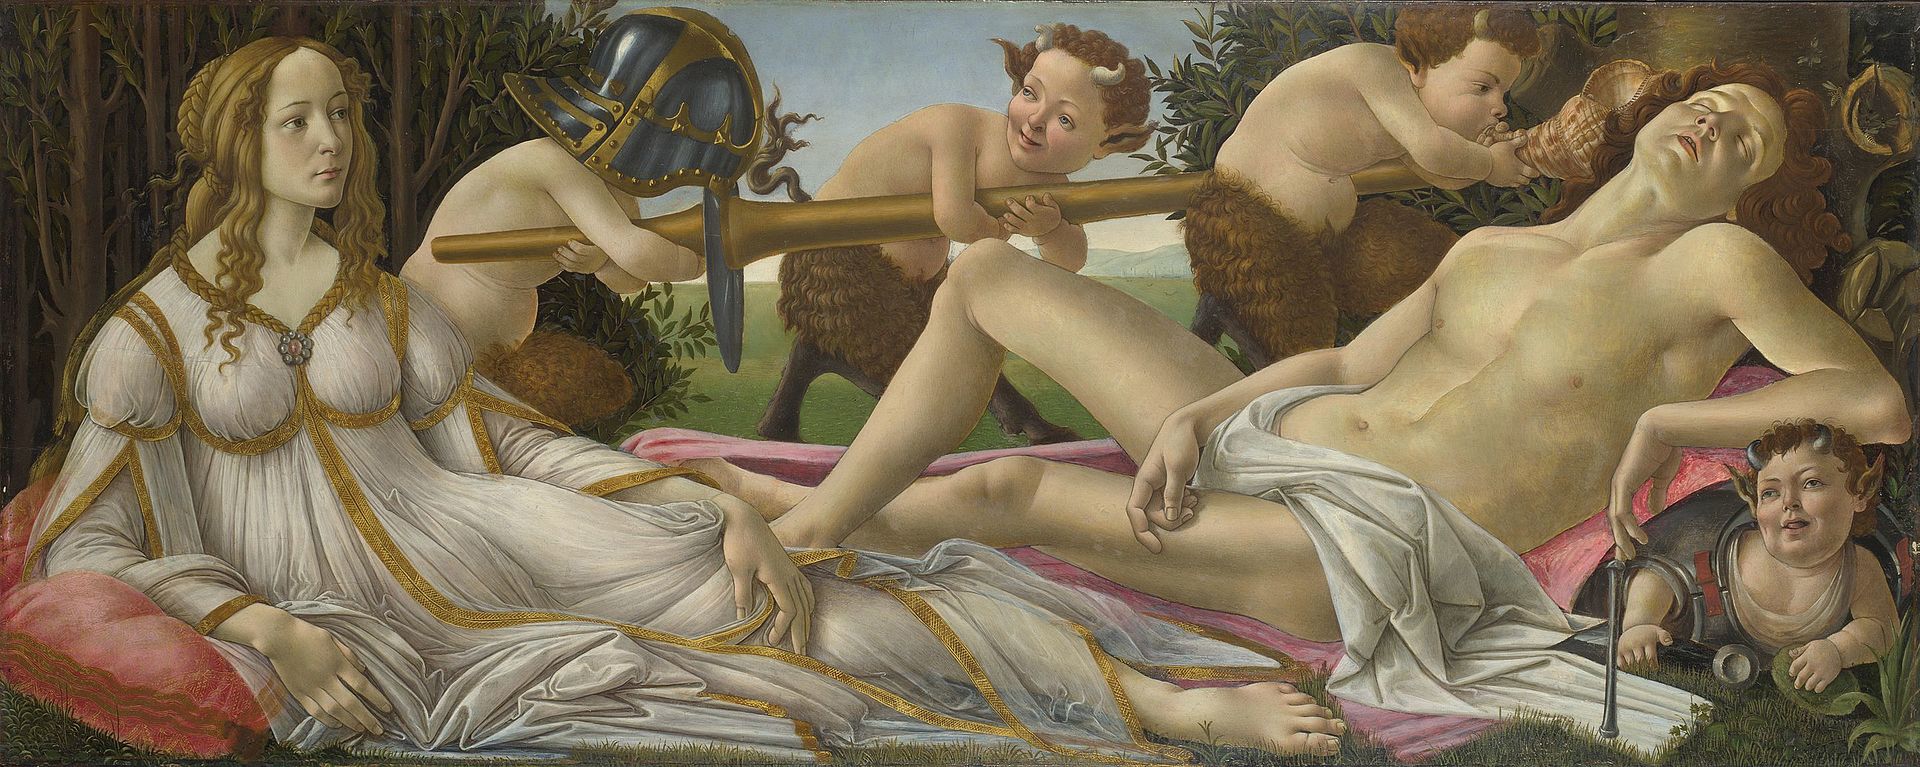 Botticelli Venus and Mars National Gallery